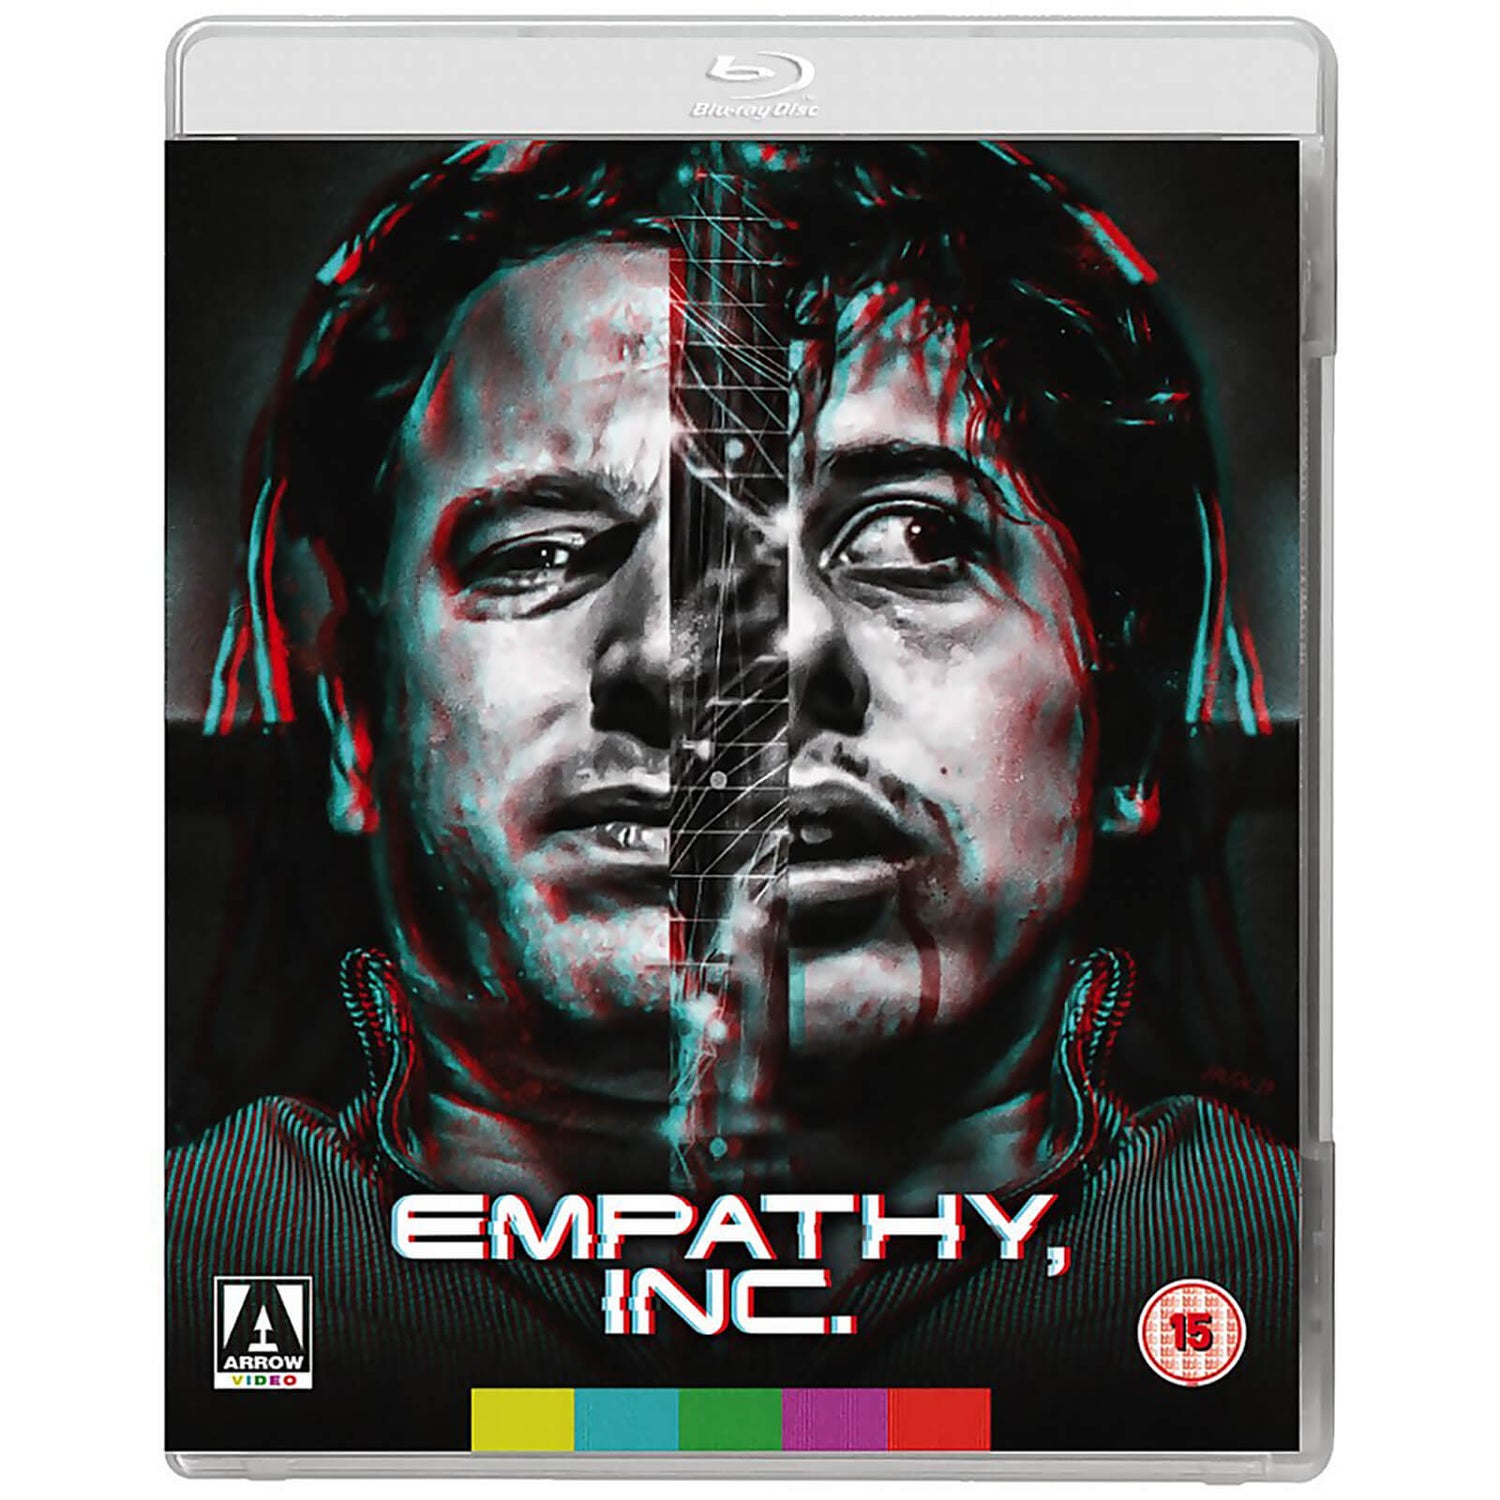 Empathy, Inc. Blu-ray